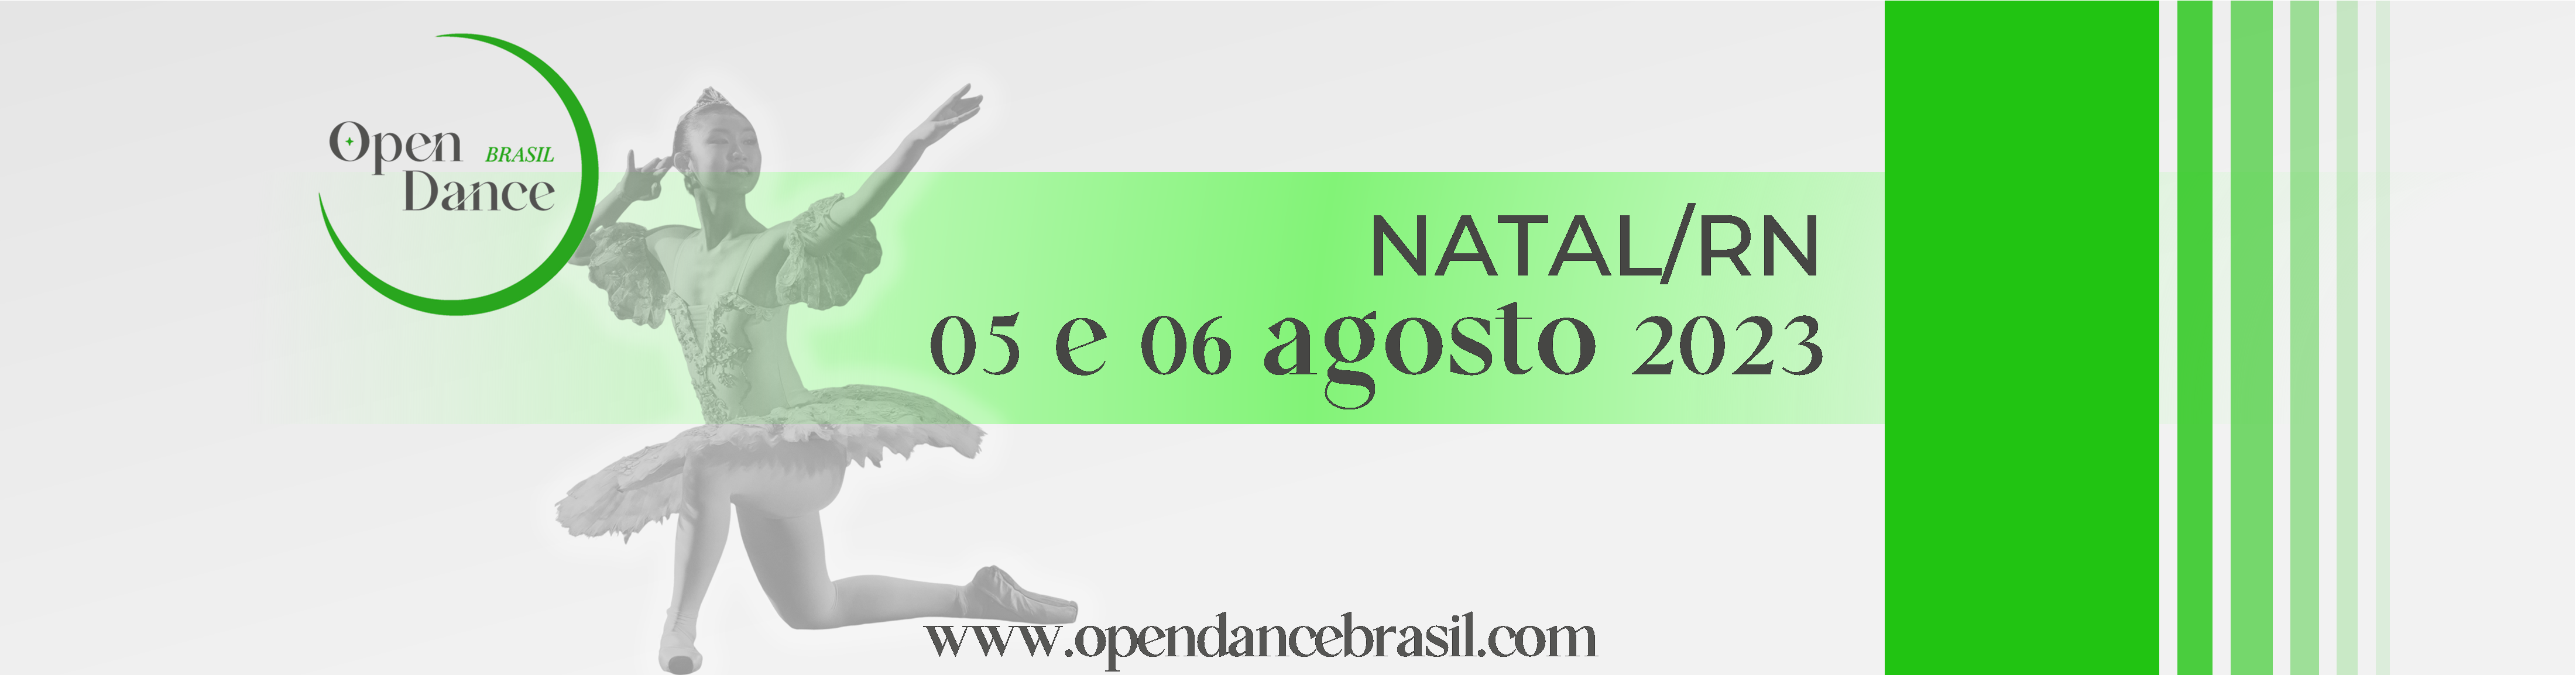 Open Dance Brasil - Edição RN 2023